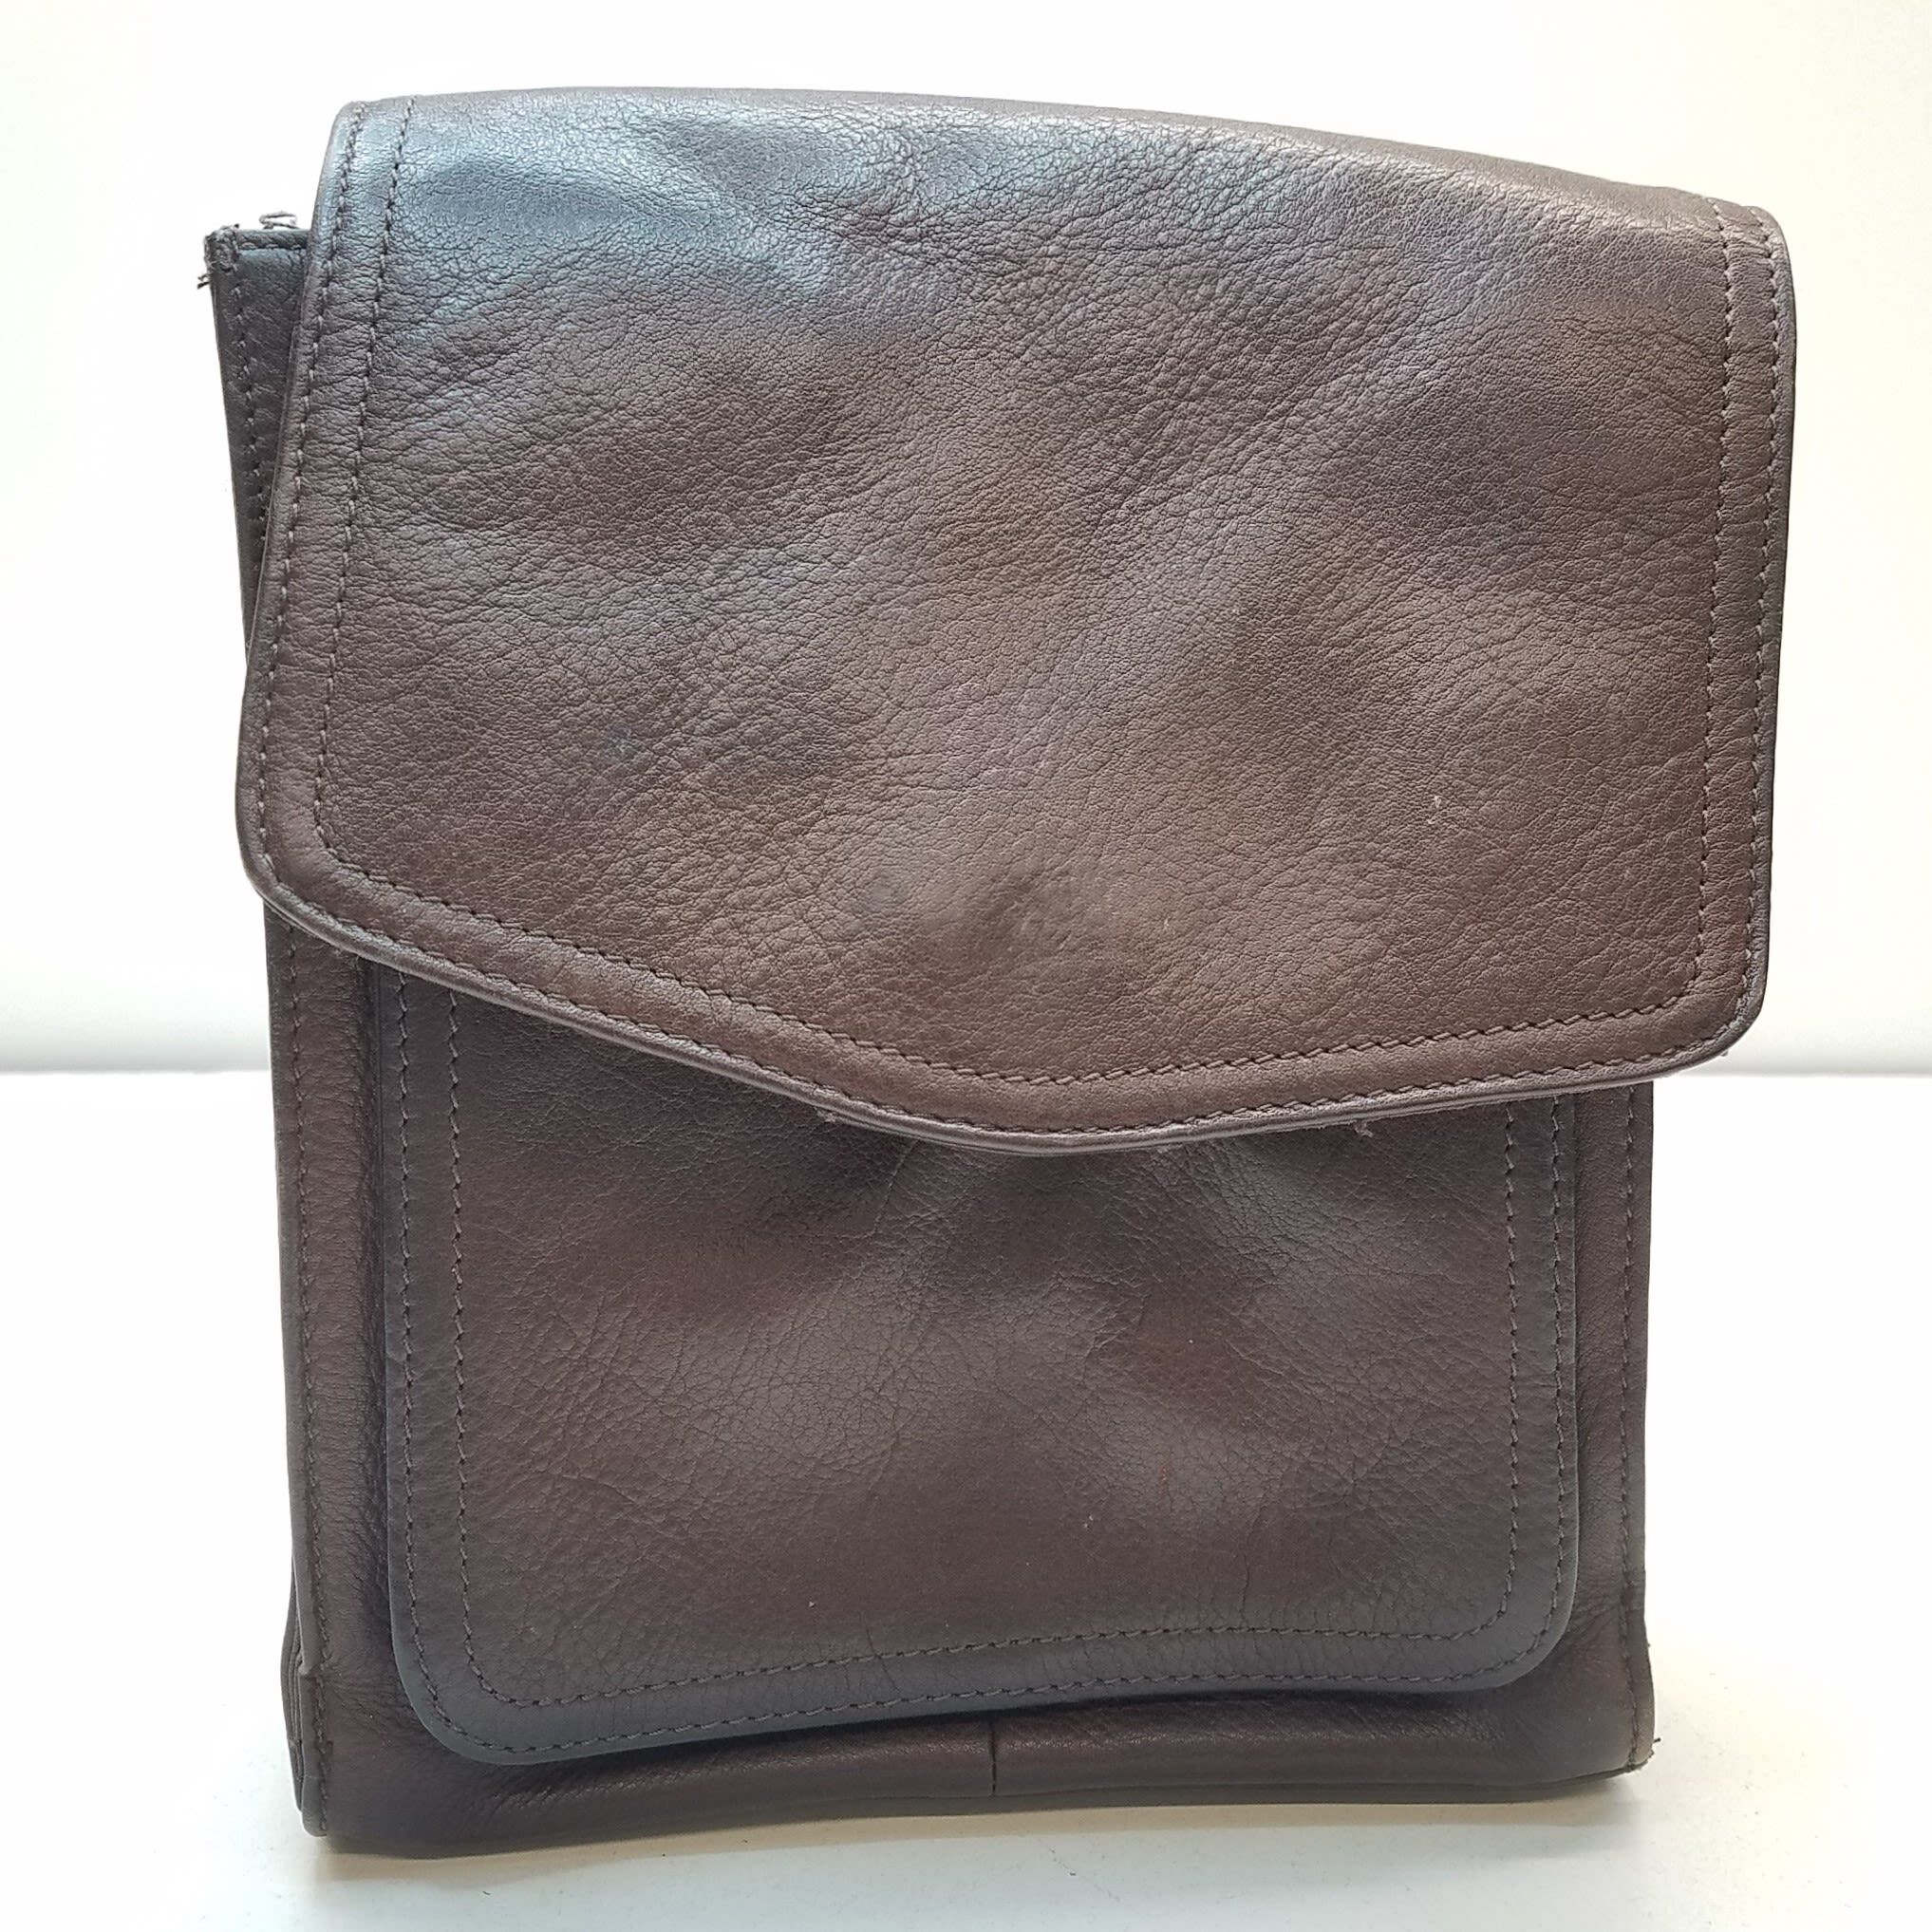 Vintage Fossil crossbody black leather purse. Super... - Depop